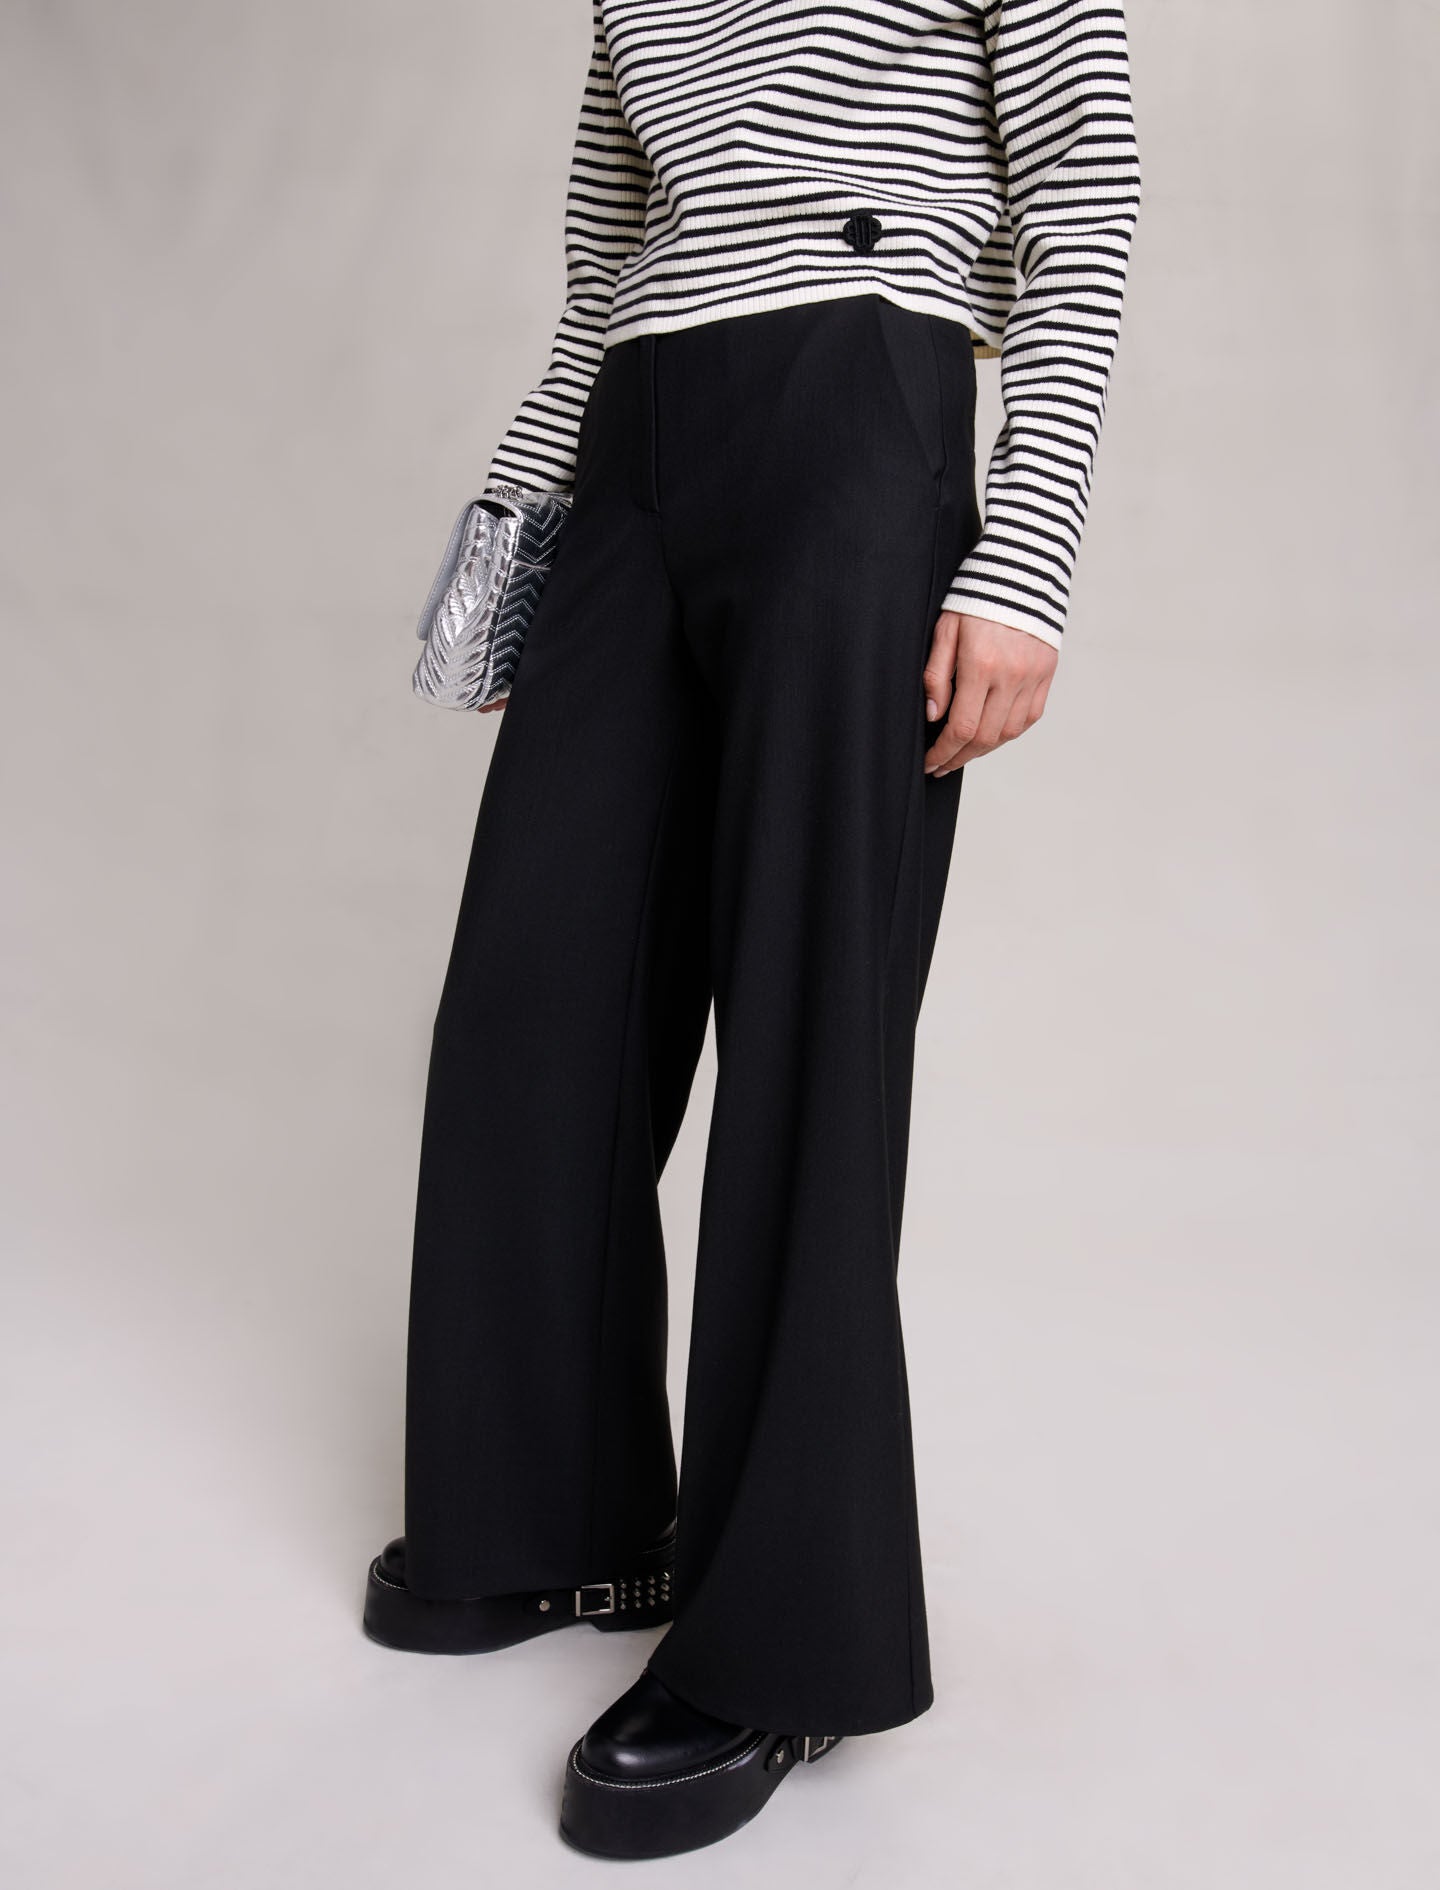 Black-flared trousers